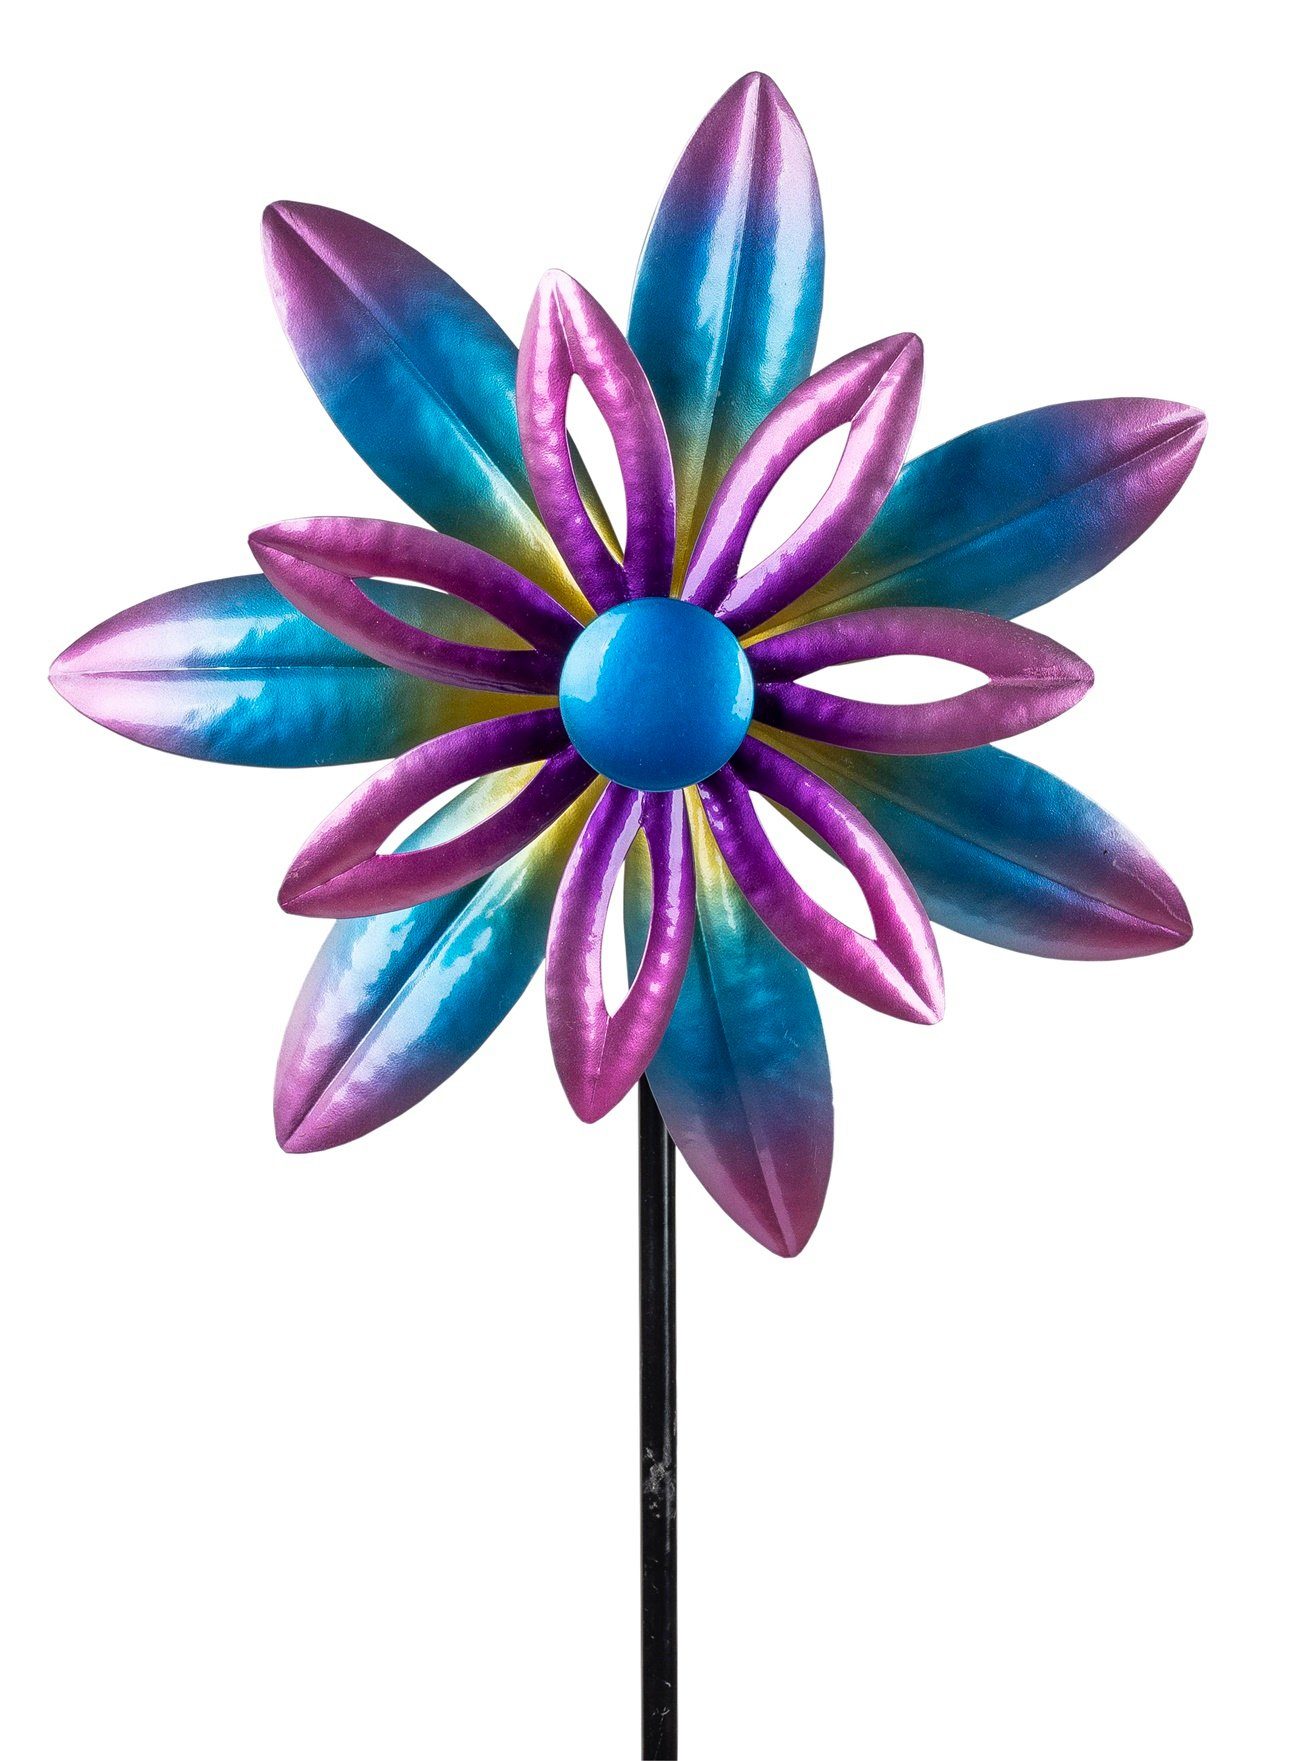 dekojohnson Deko-Windrad Windrad Blume 30x126cm Metall Gartendeko (kein Set) kein violett Set